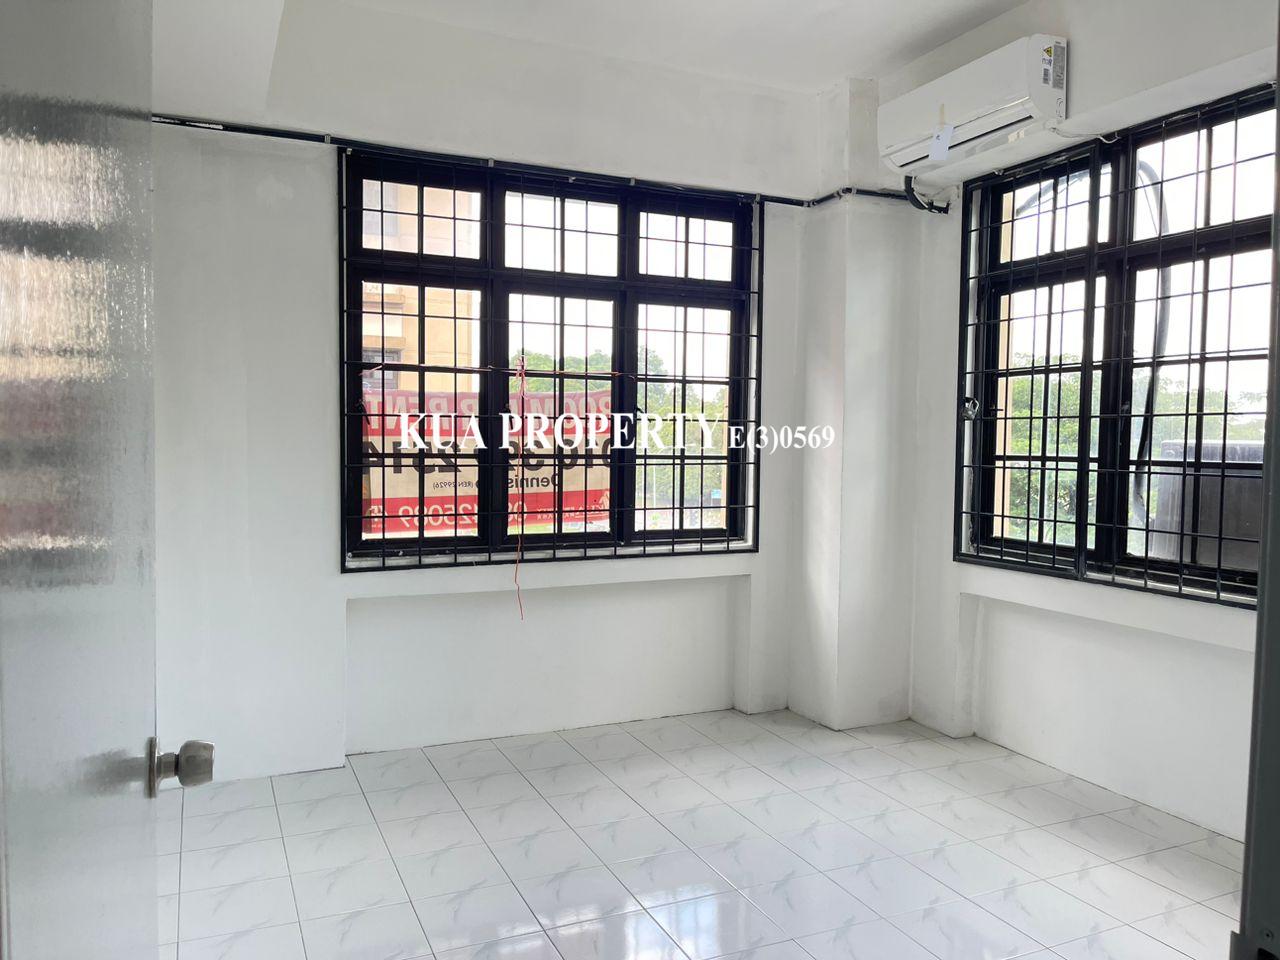 2nd Floor Single Room for Rent! Located at MJC, Batu Kawa